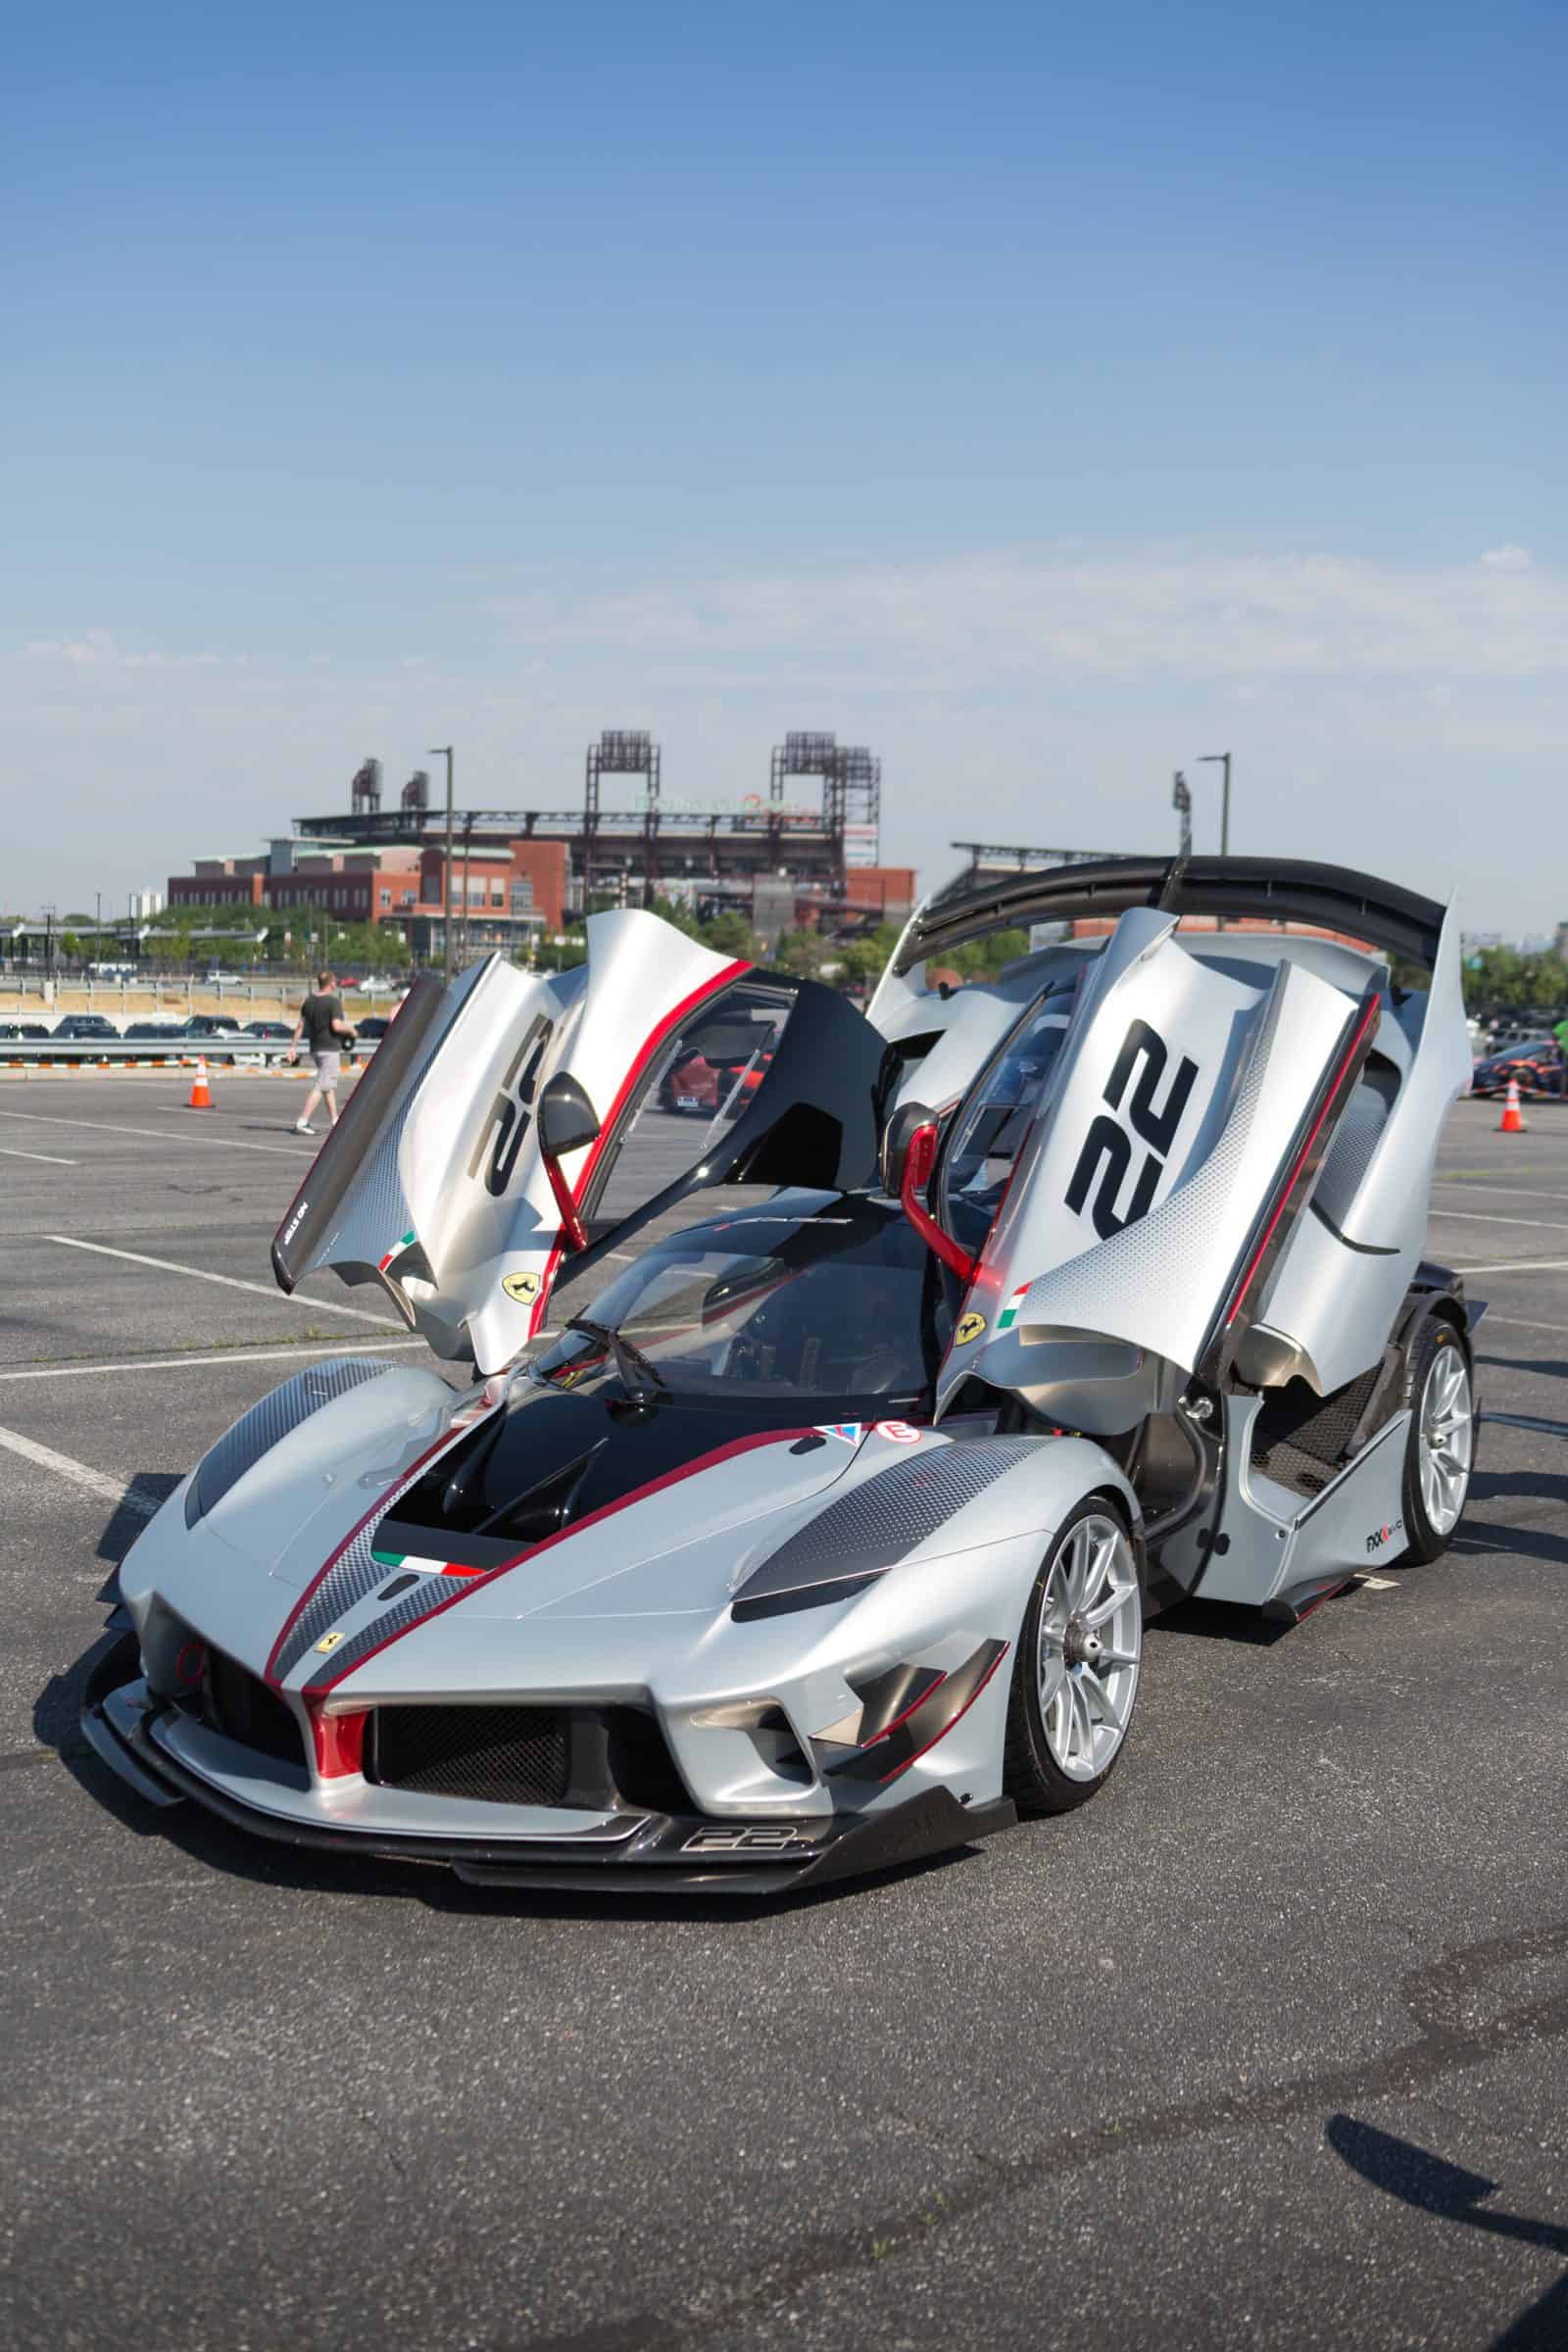 Ferrari FXXK in the Supercar show near Philly stadiums